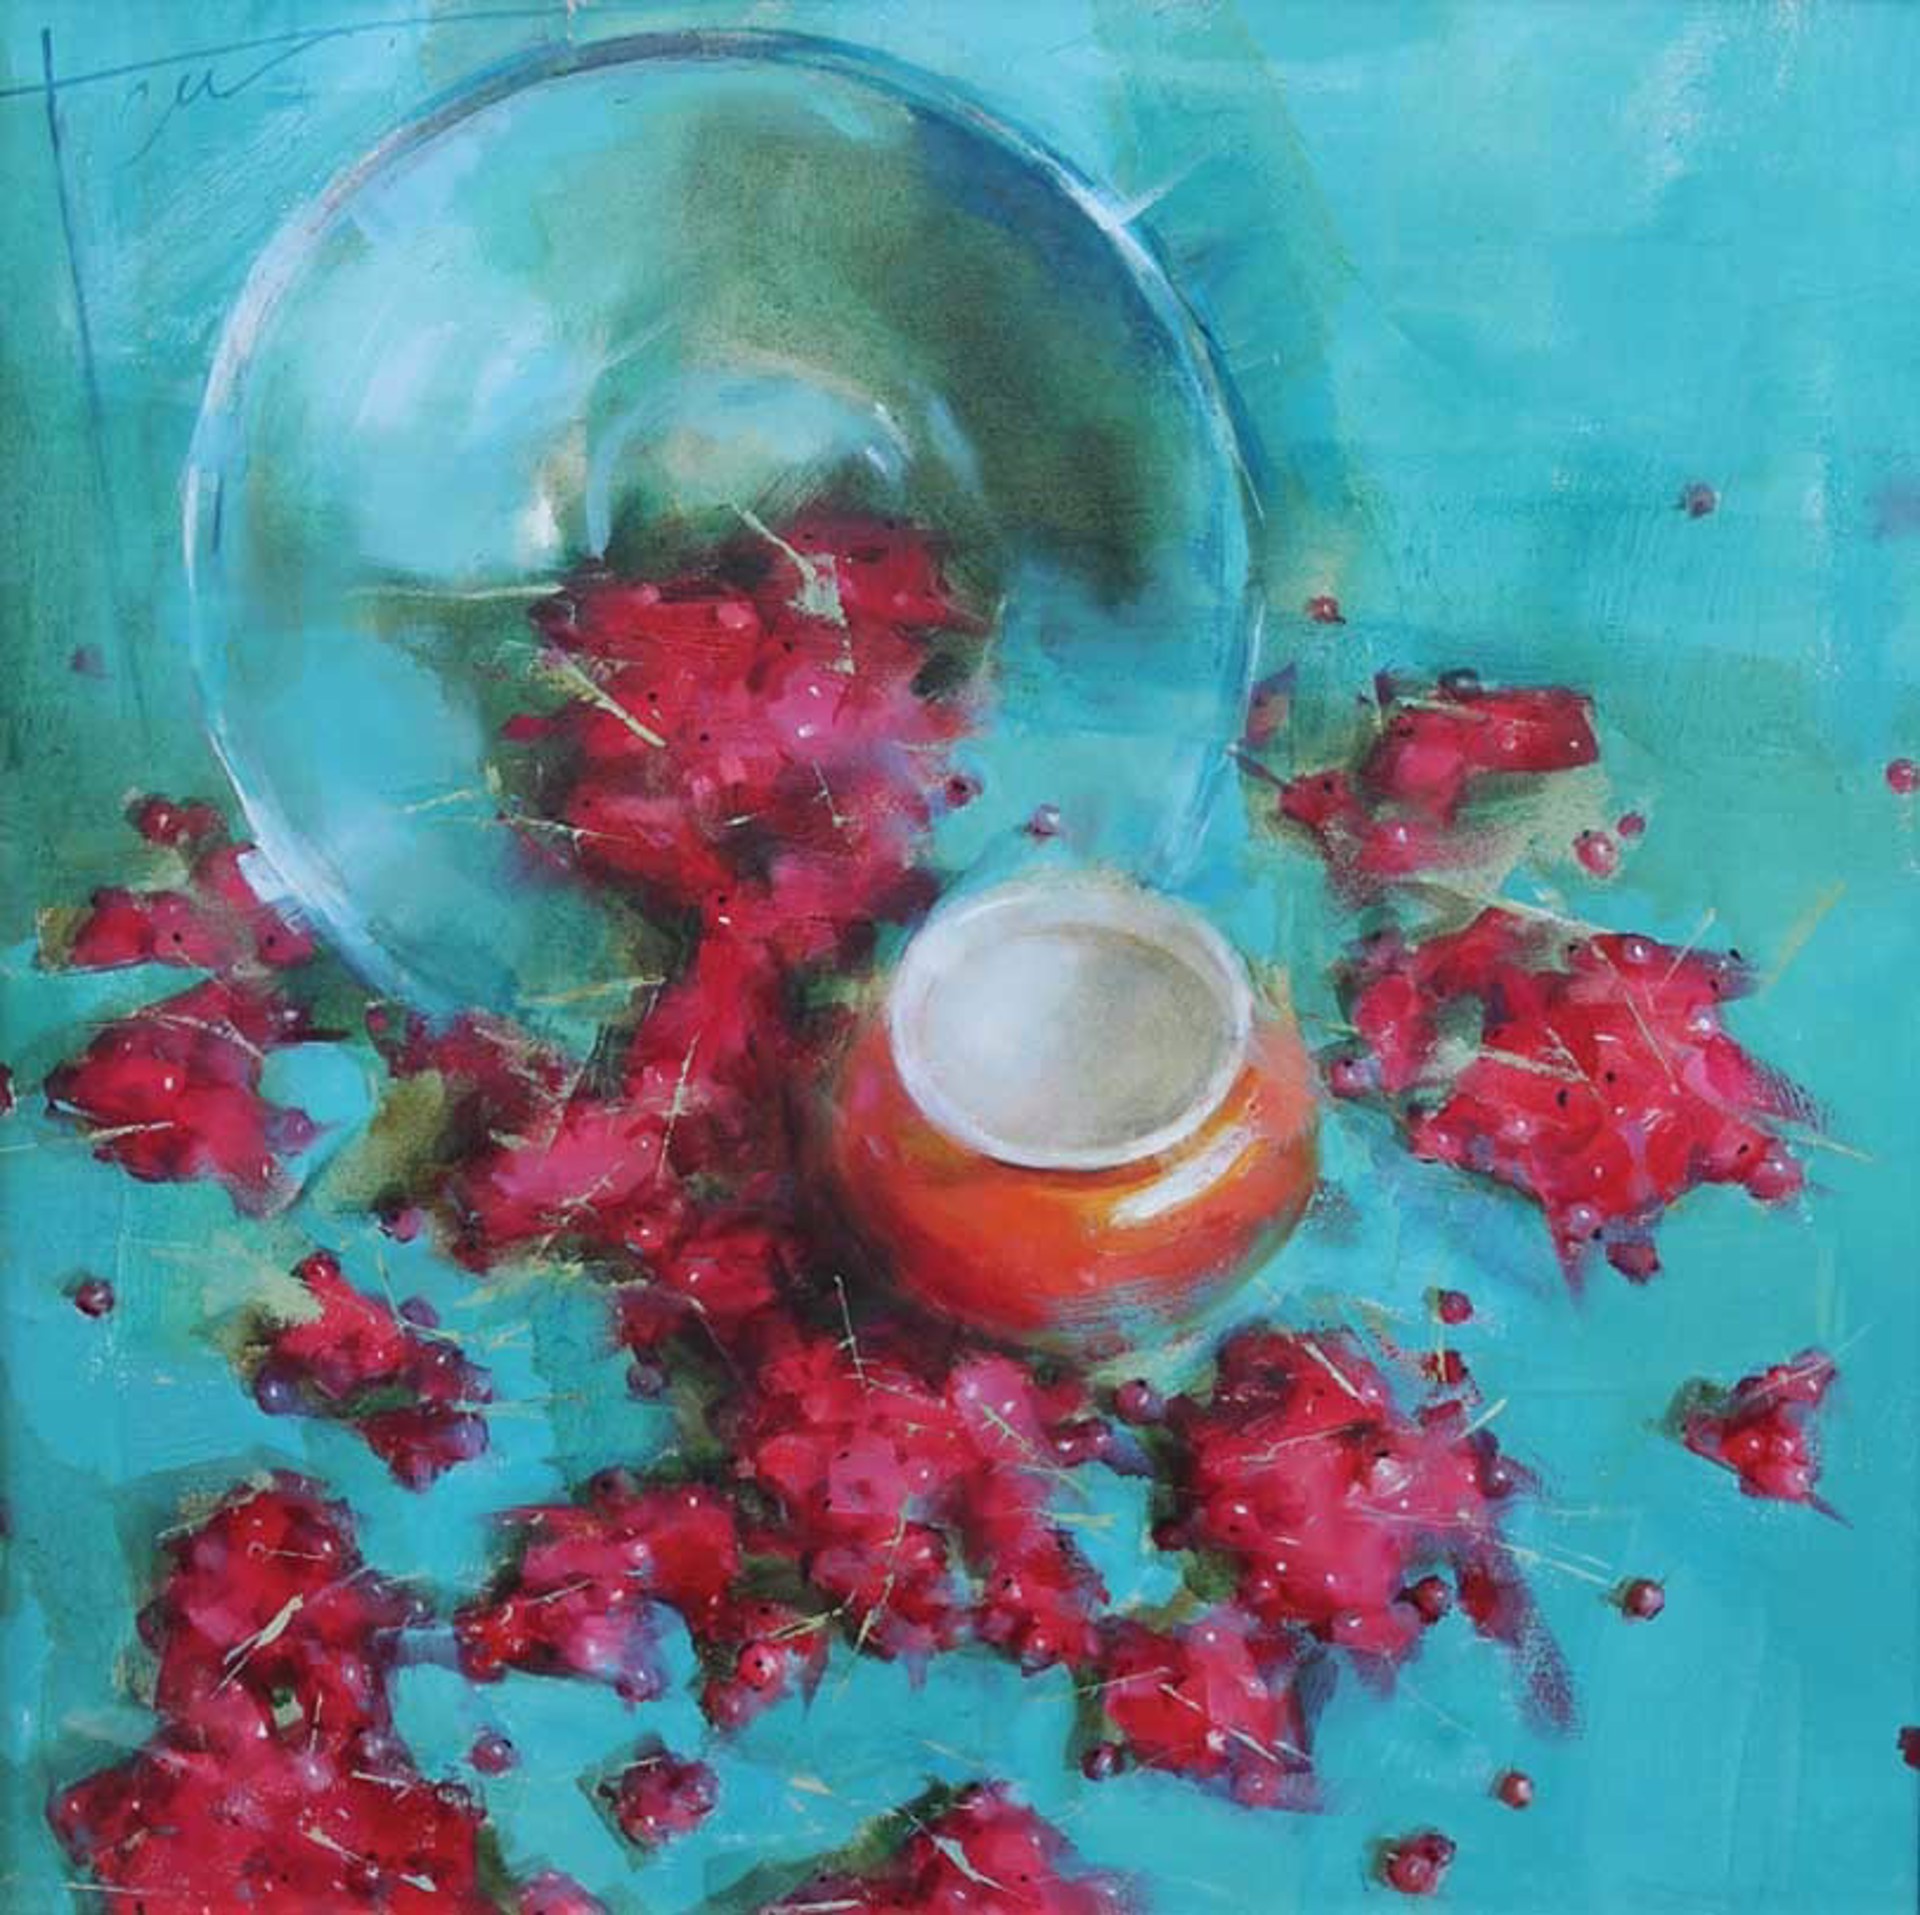 Red Currants by Yana Golubyatnikova